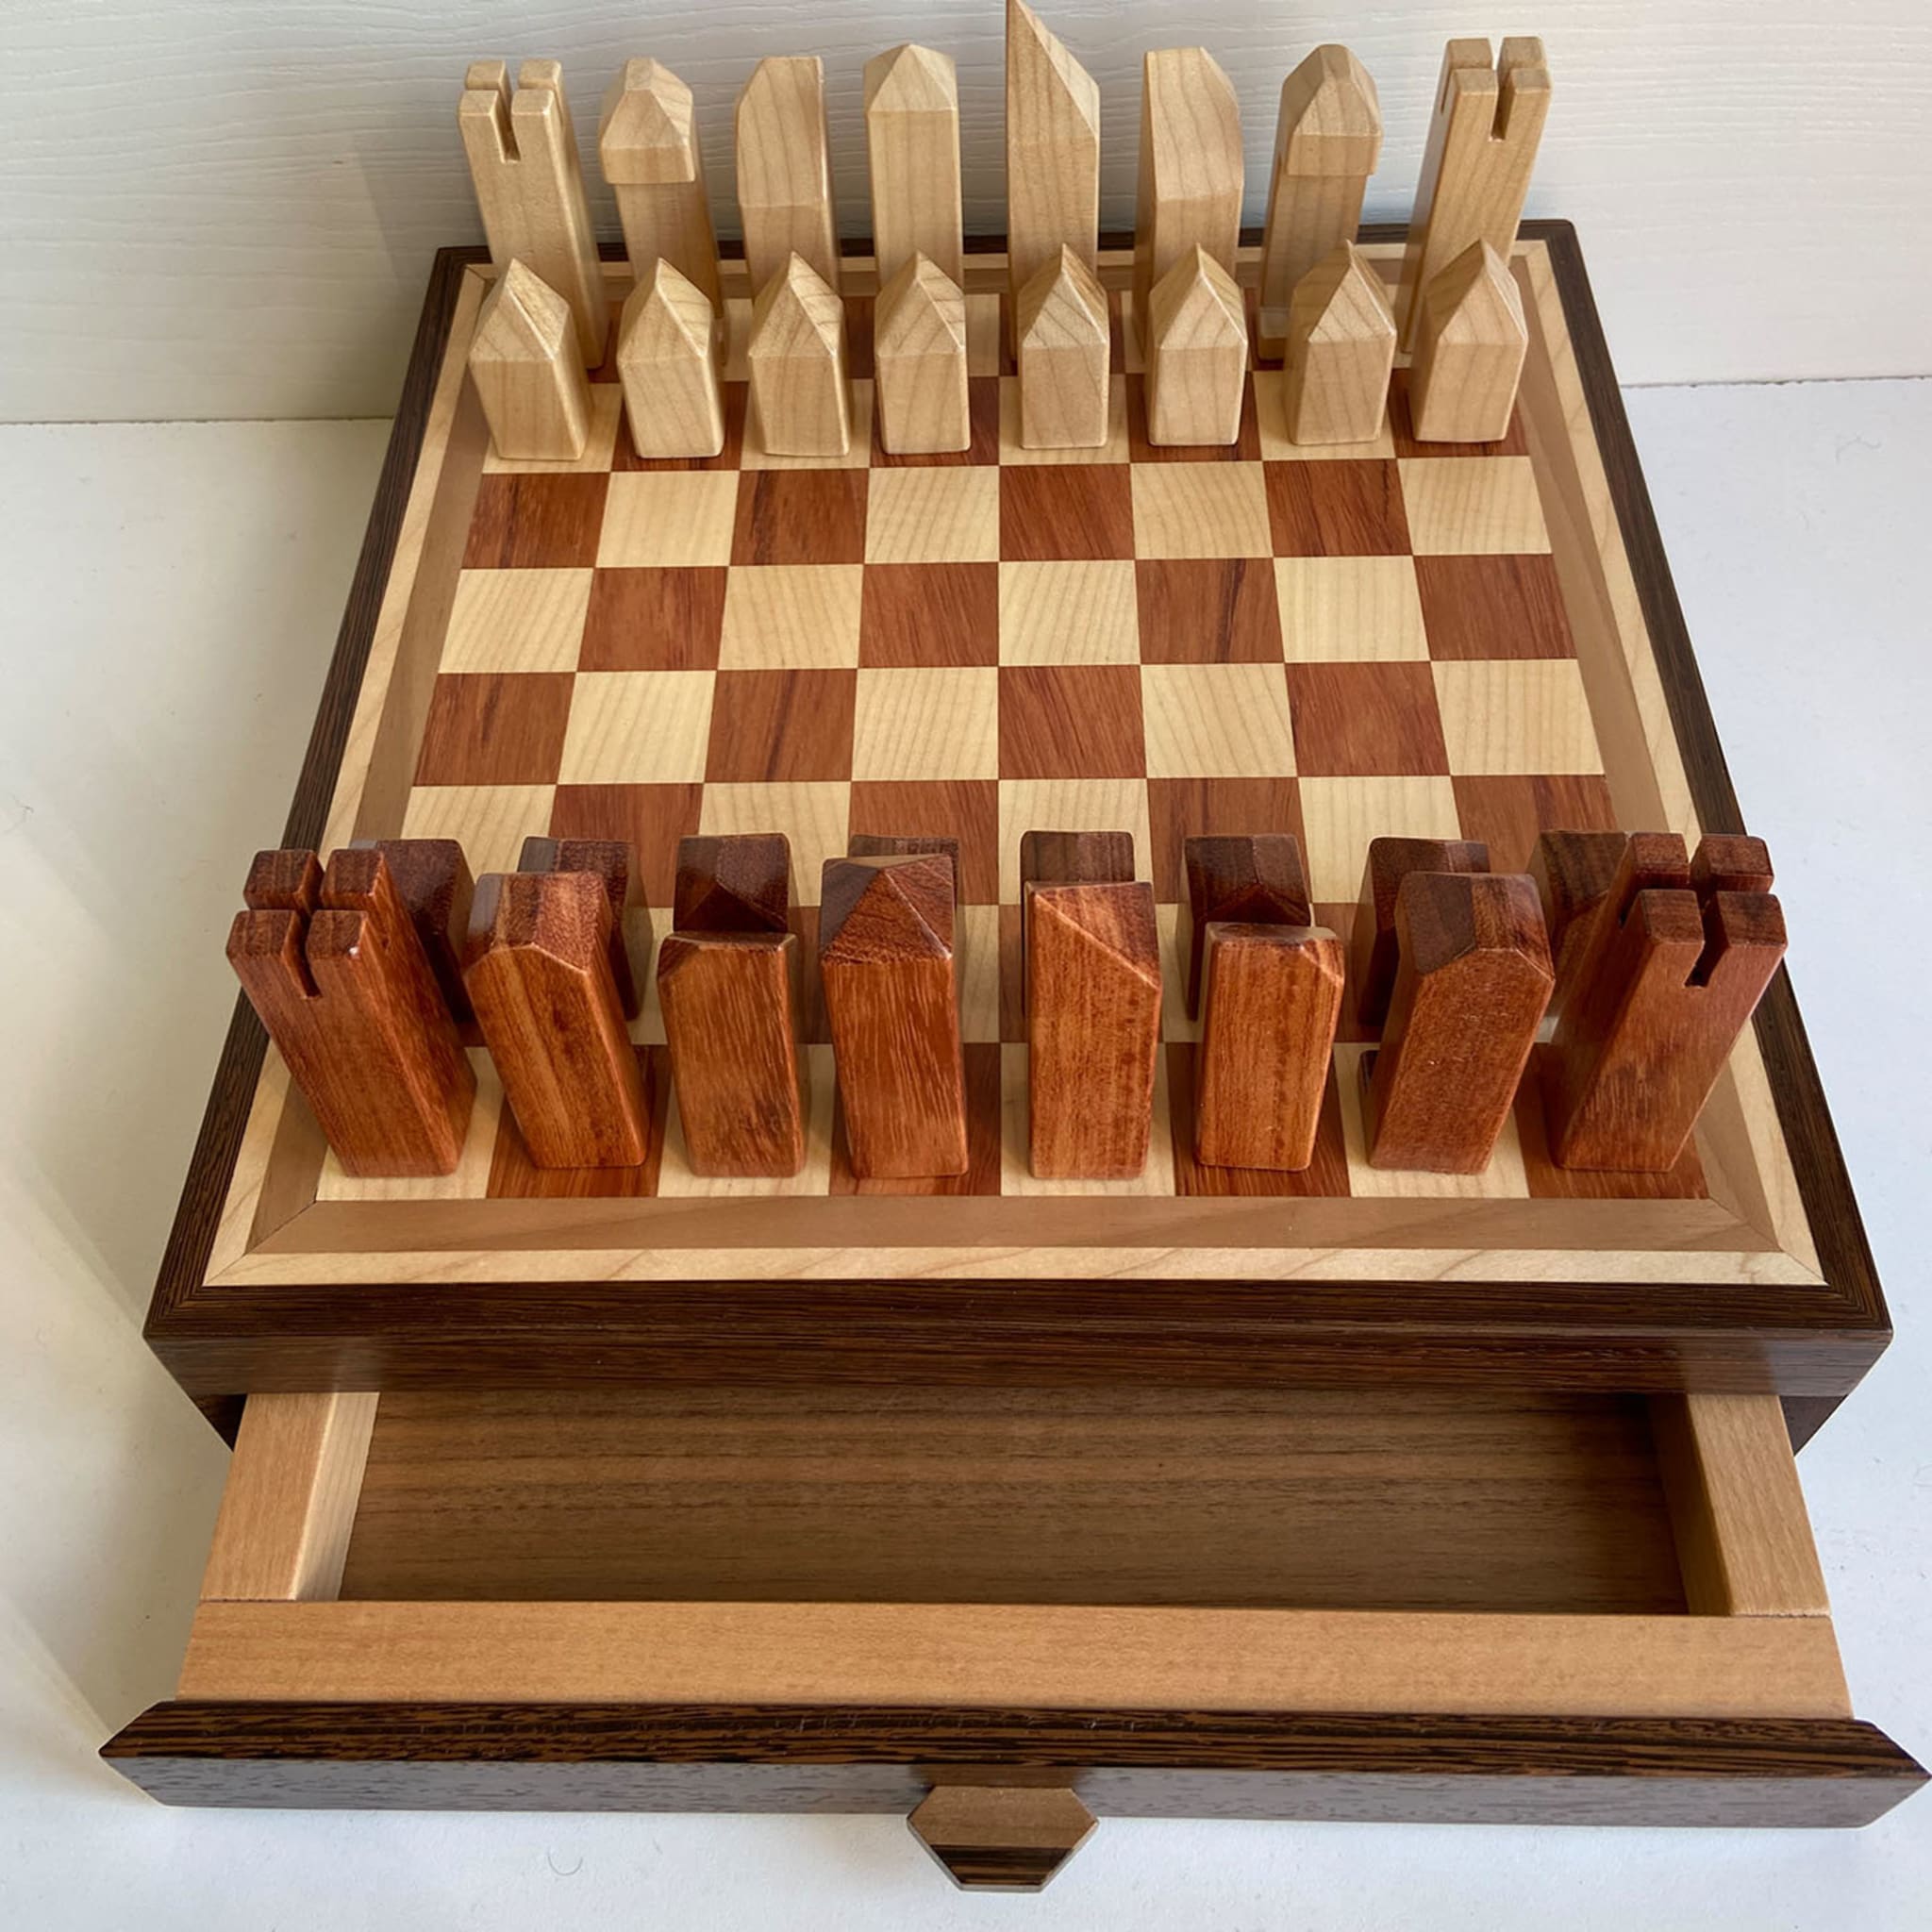 Maple and Bubinga Chessboard - Alternative view 1